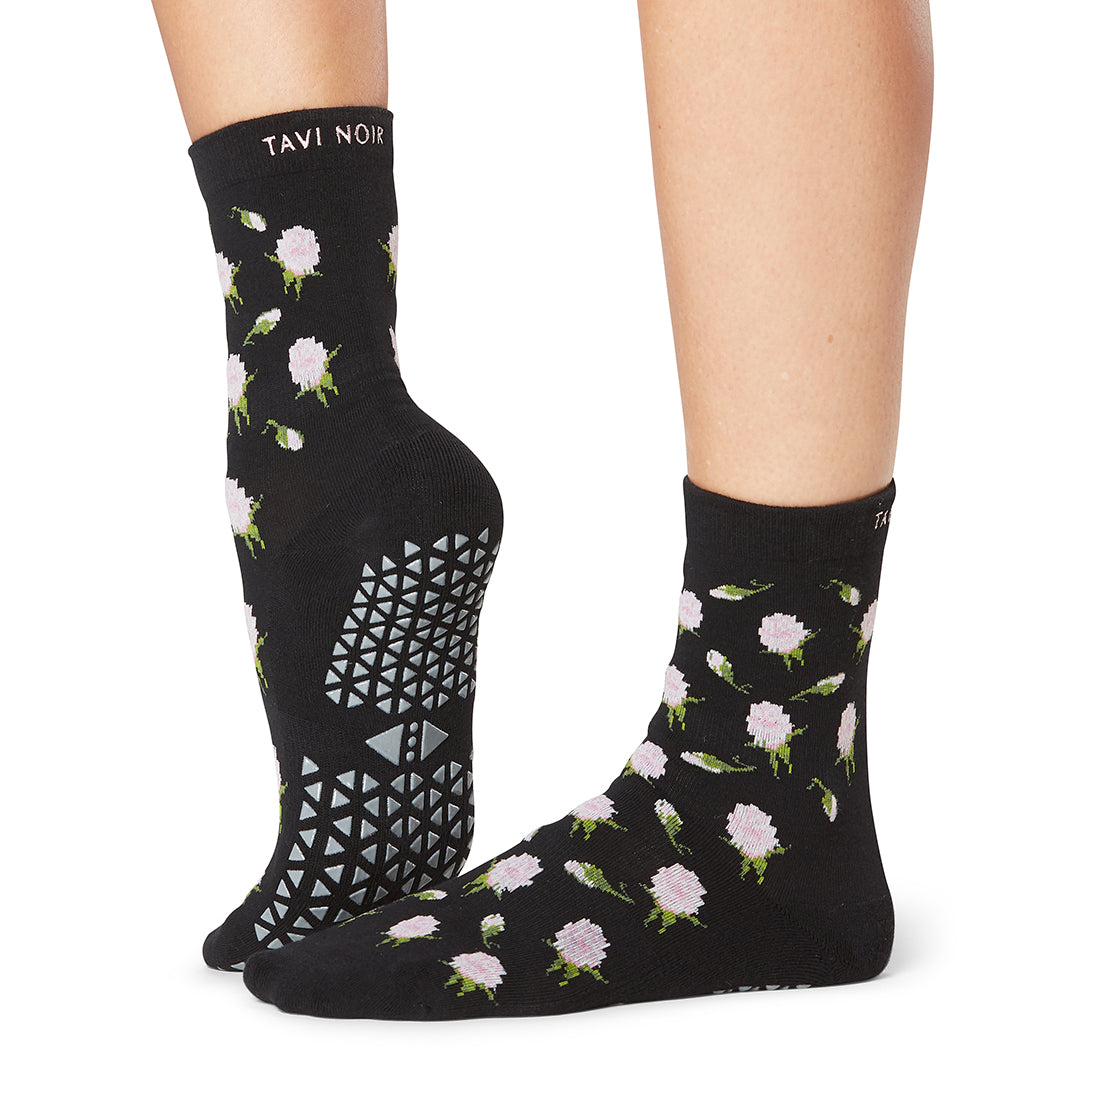 Tavi Noir Penny Grip Socks - T8 Fitness - Asia Yoga, Pilates, Rehab,  Fitness Products